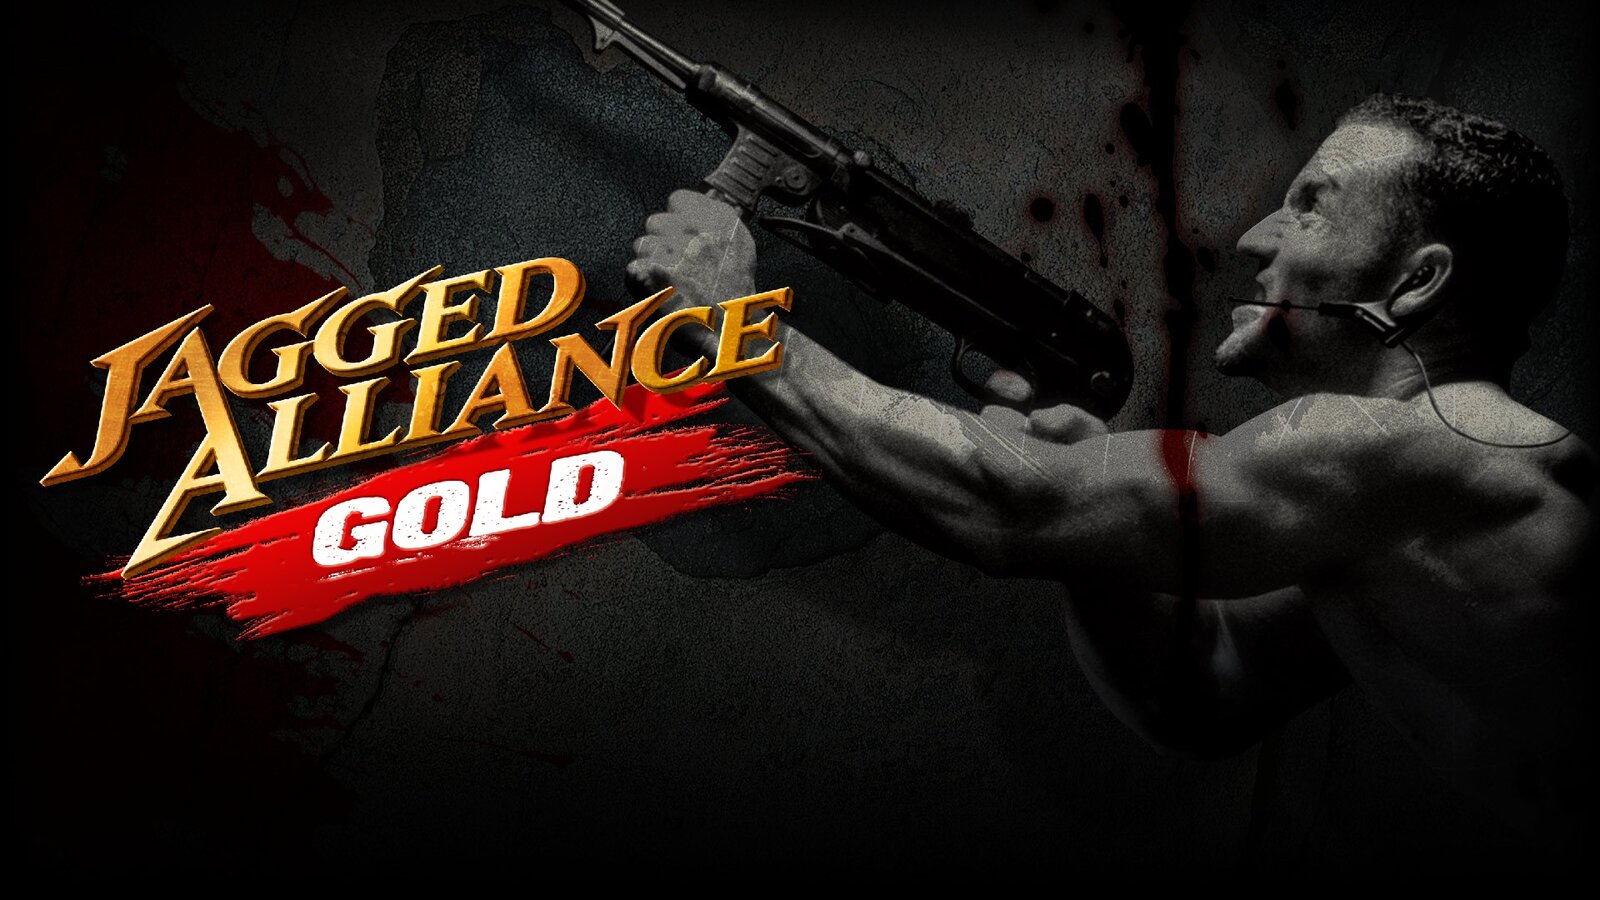 Jagged Alliance 1: Gold Edition